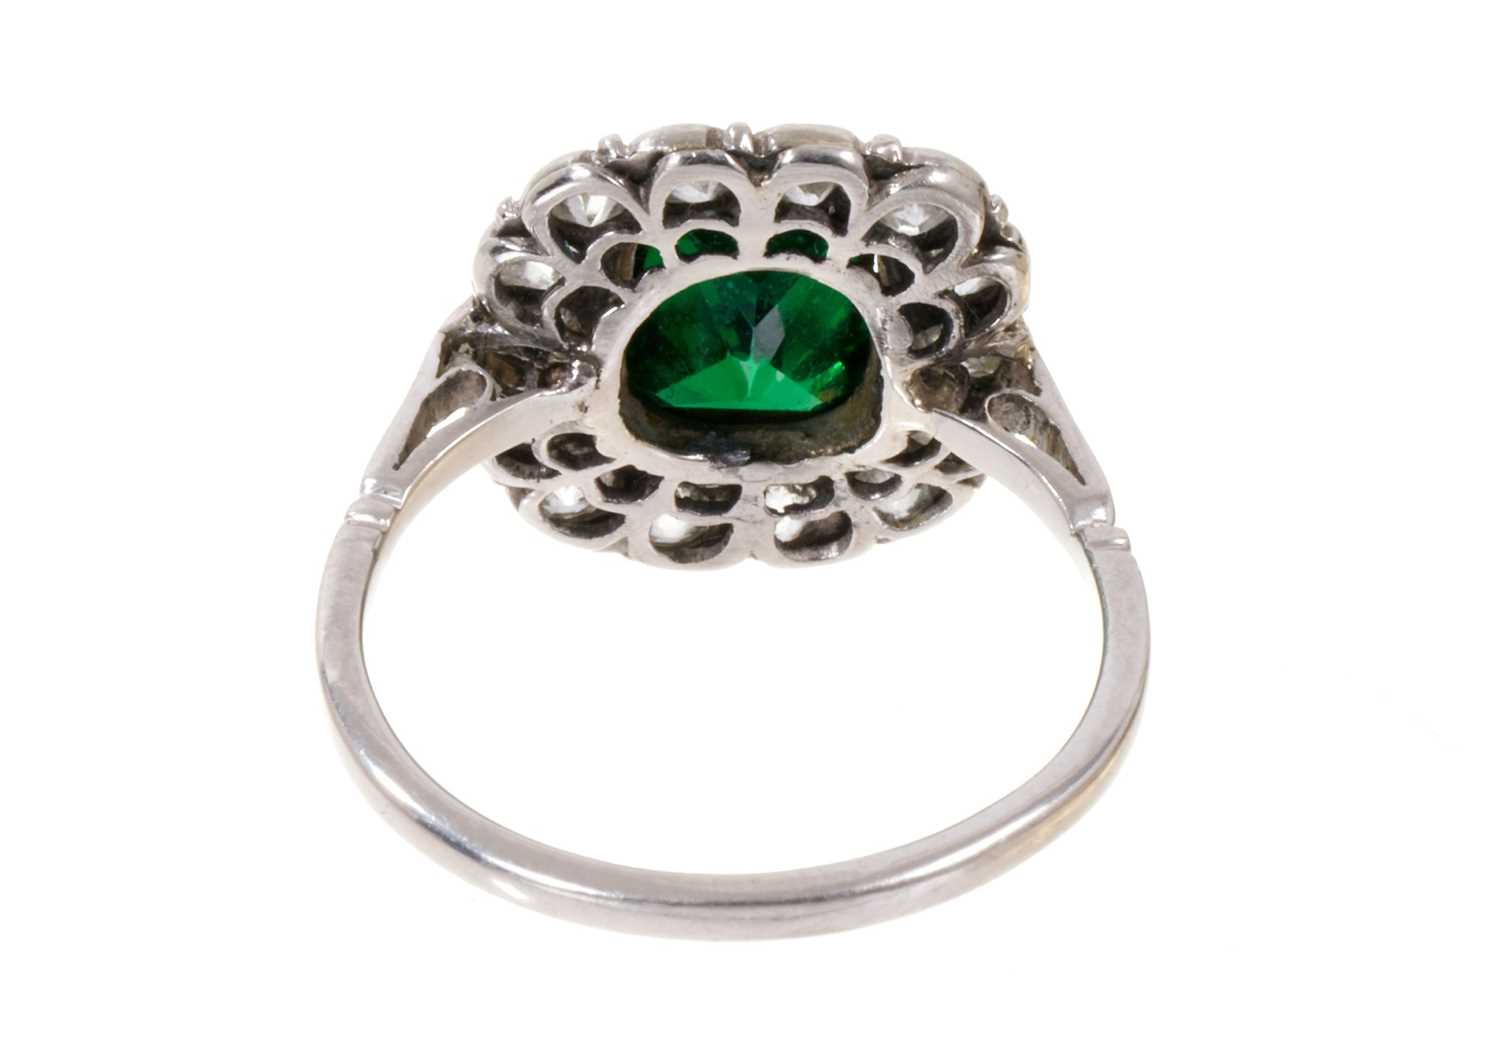 1920s diamond and green stone platinum ring - Image 3 of 4